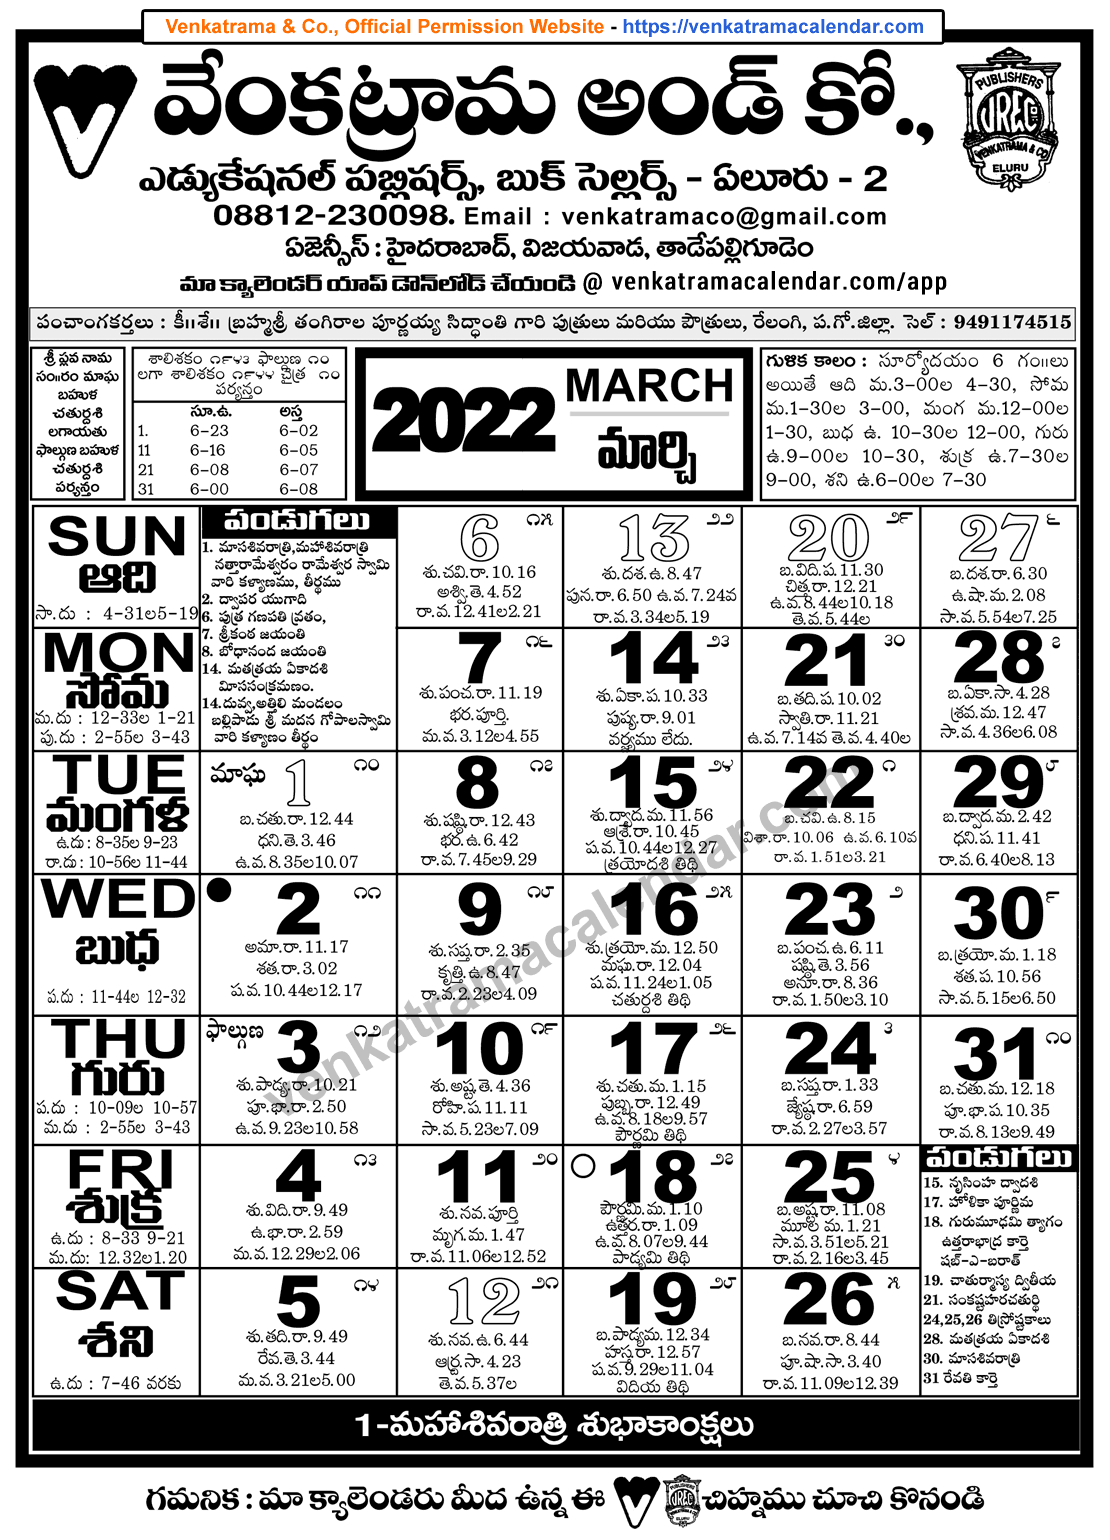 Venkatrama Telugu Calendar 2022 March